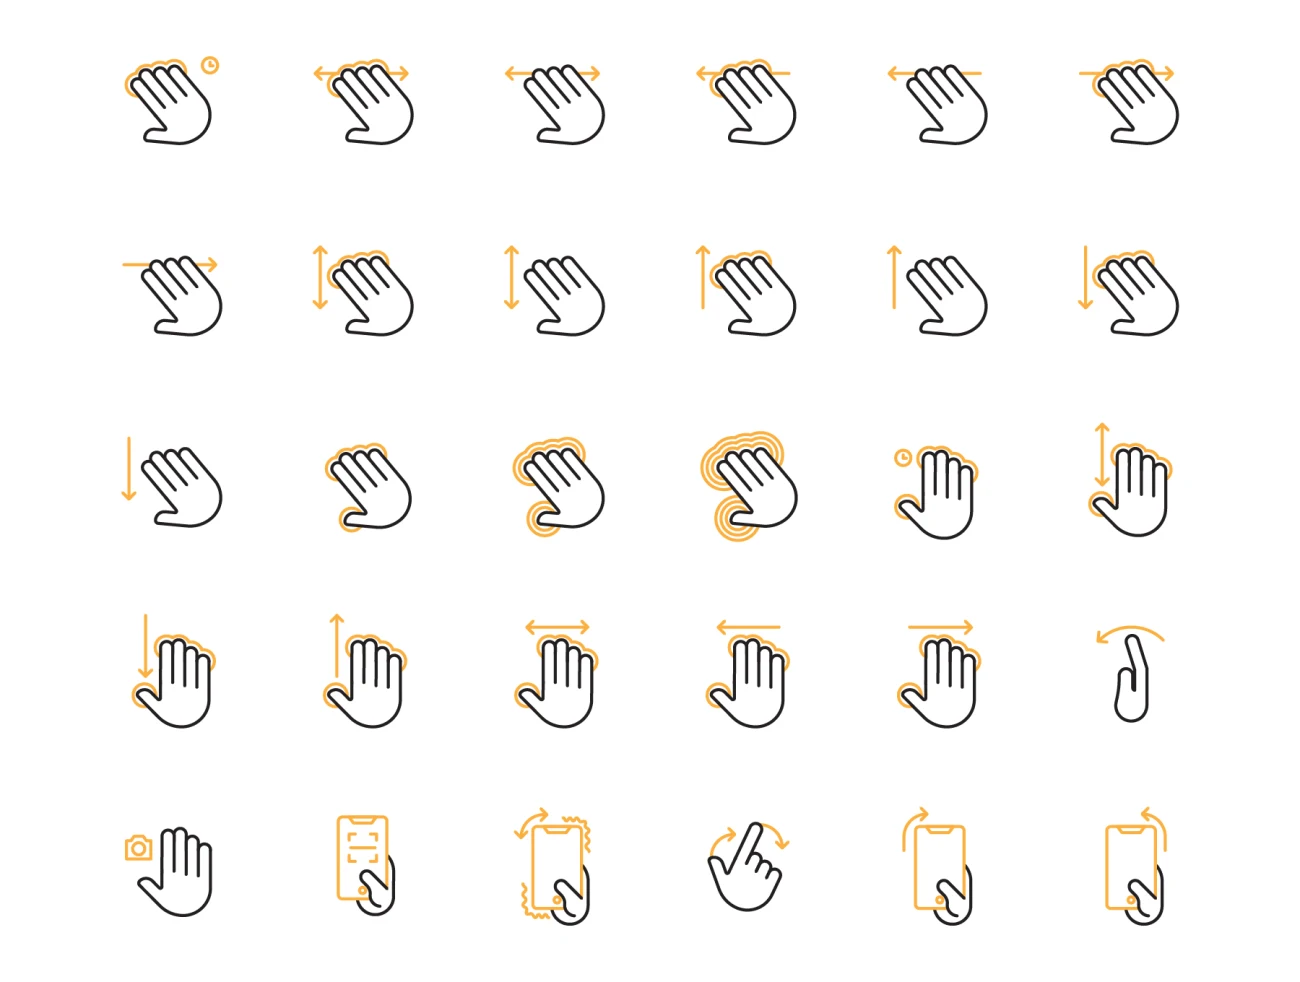 300款手势操作图标素材下载 300 Hand Gesture Icon Set .svg .png .jpeg-3D/图标-到位啦UI